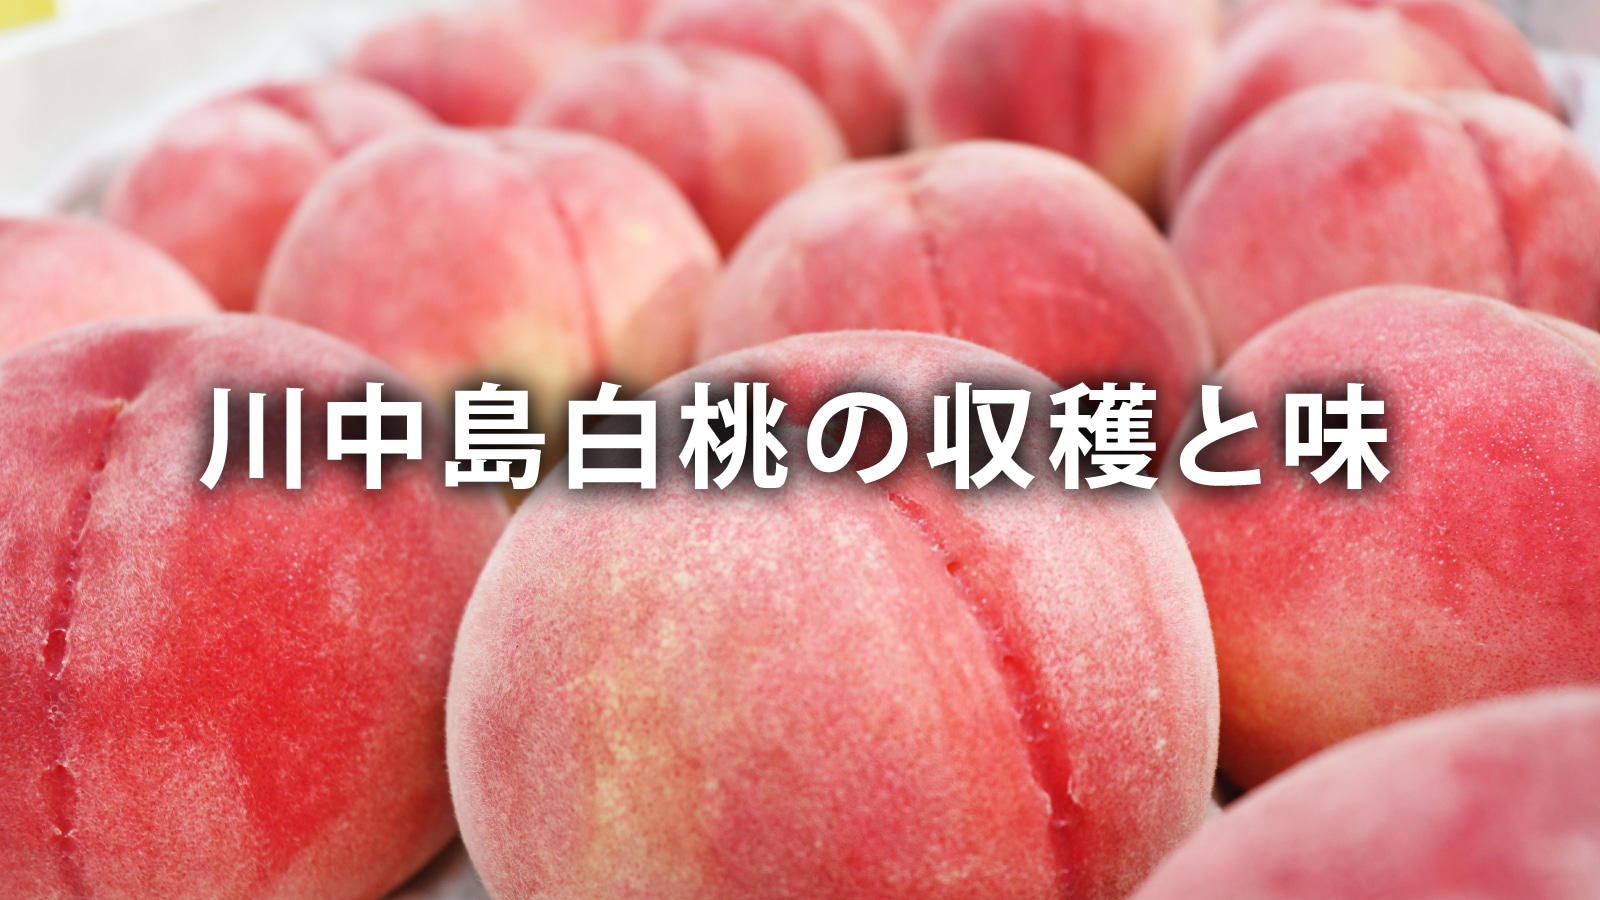 /w4/engeijin/ふくしま産川中島白桃の収穫と味